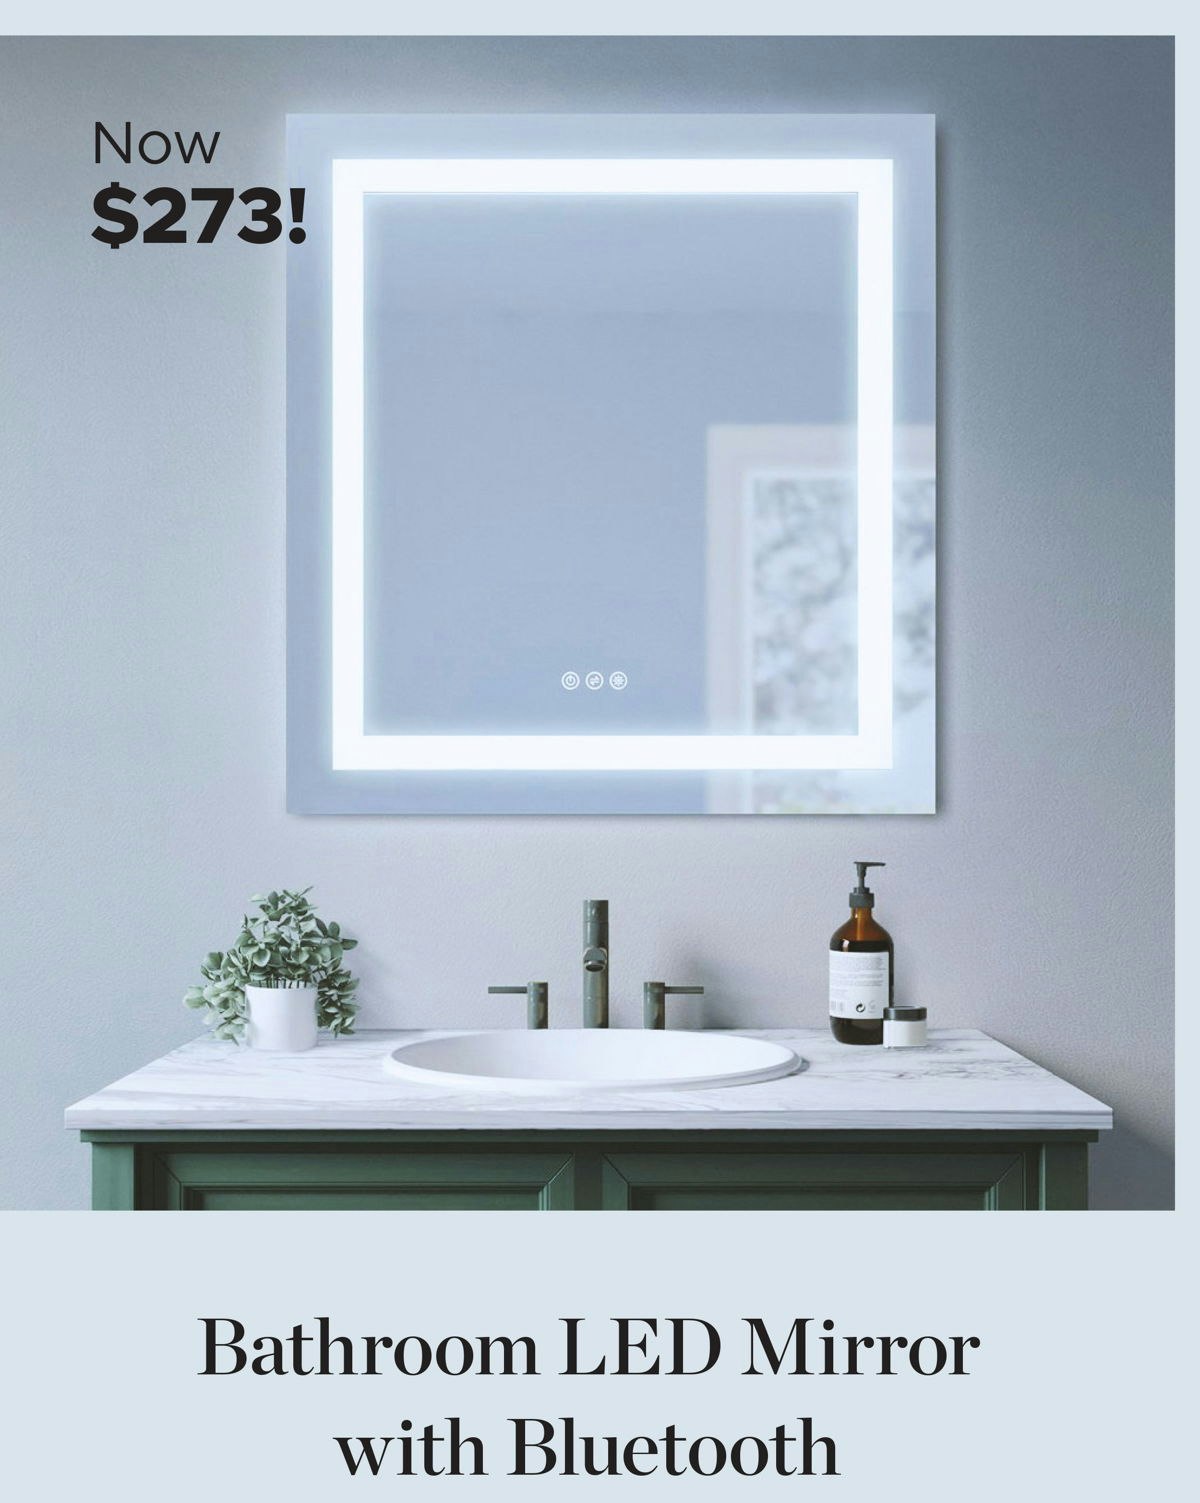 Bathroom LED Mirror with Bluetooth